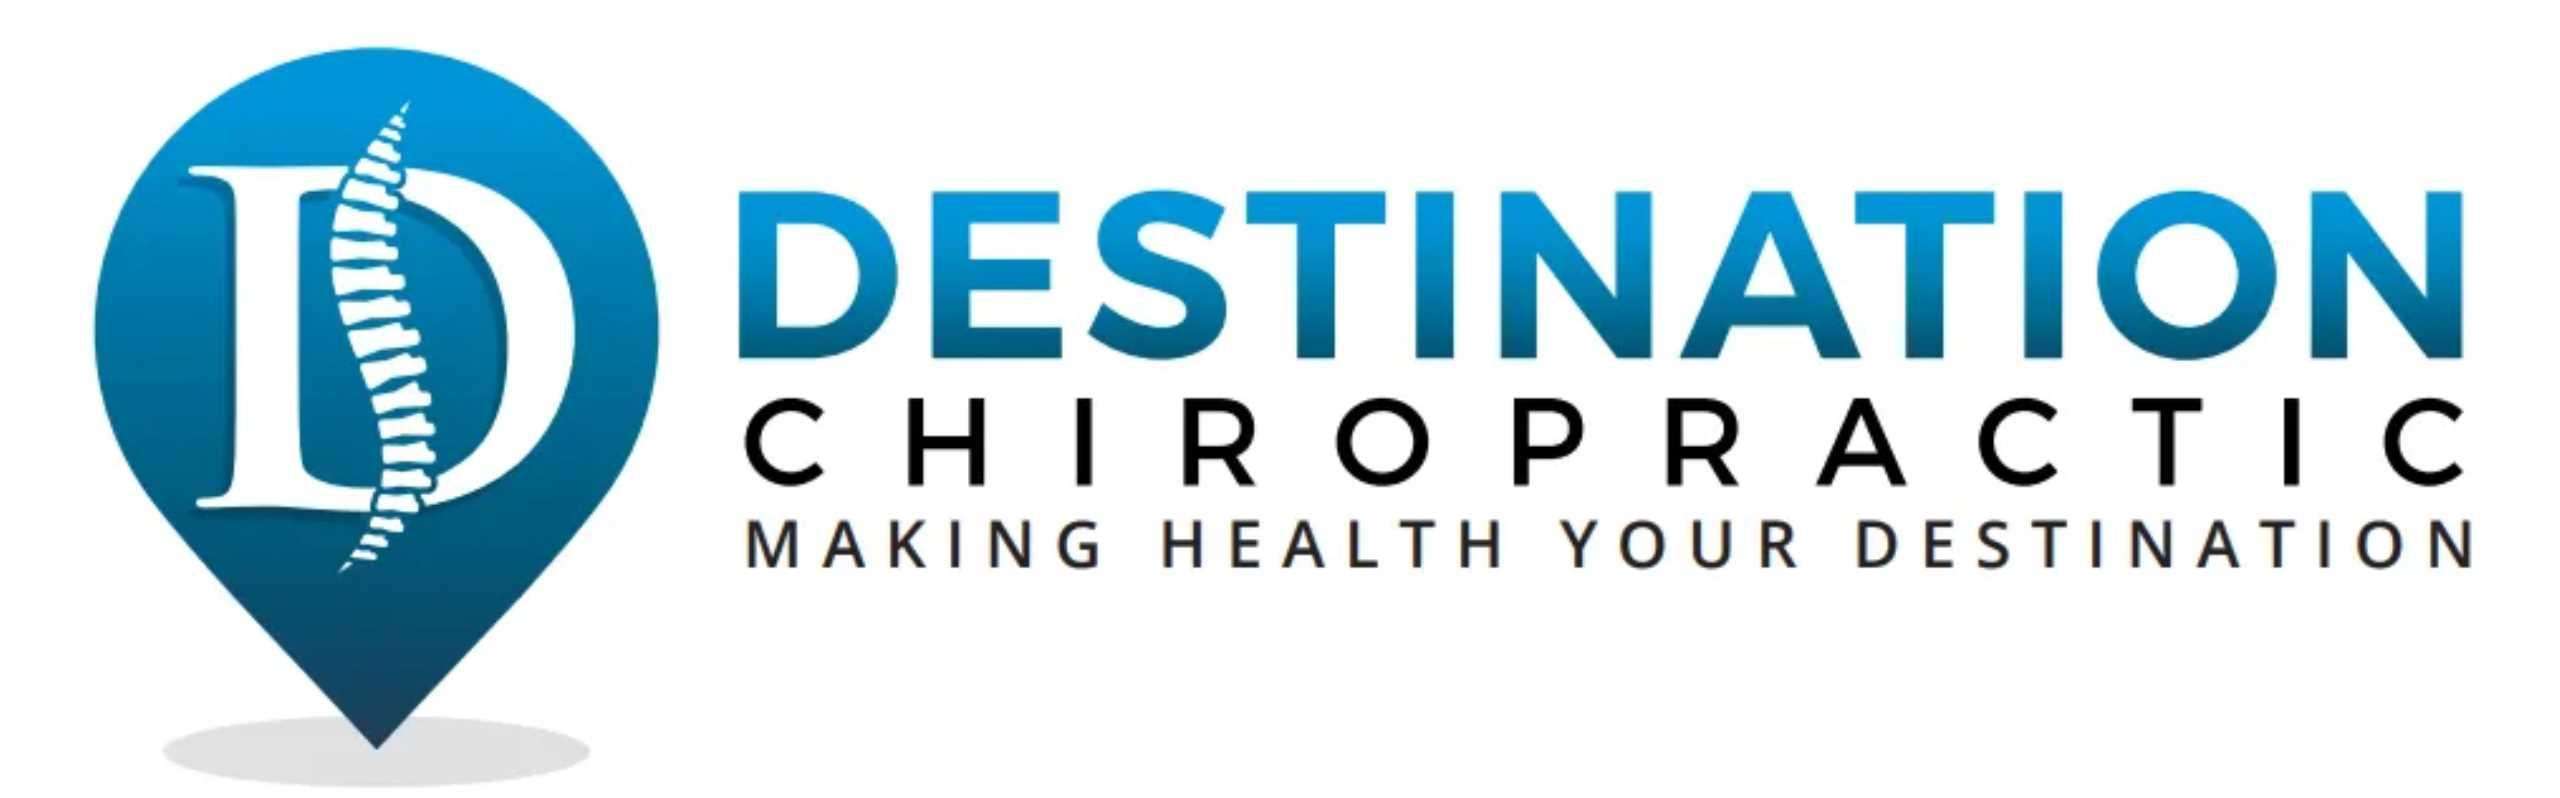 Destination Chiropractic LLC Logo